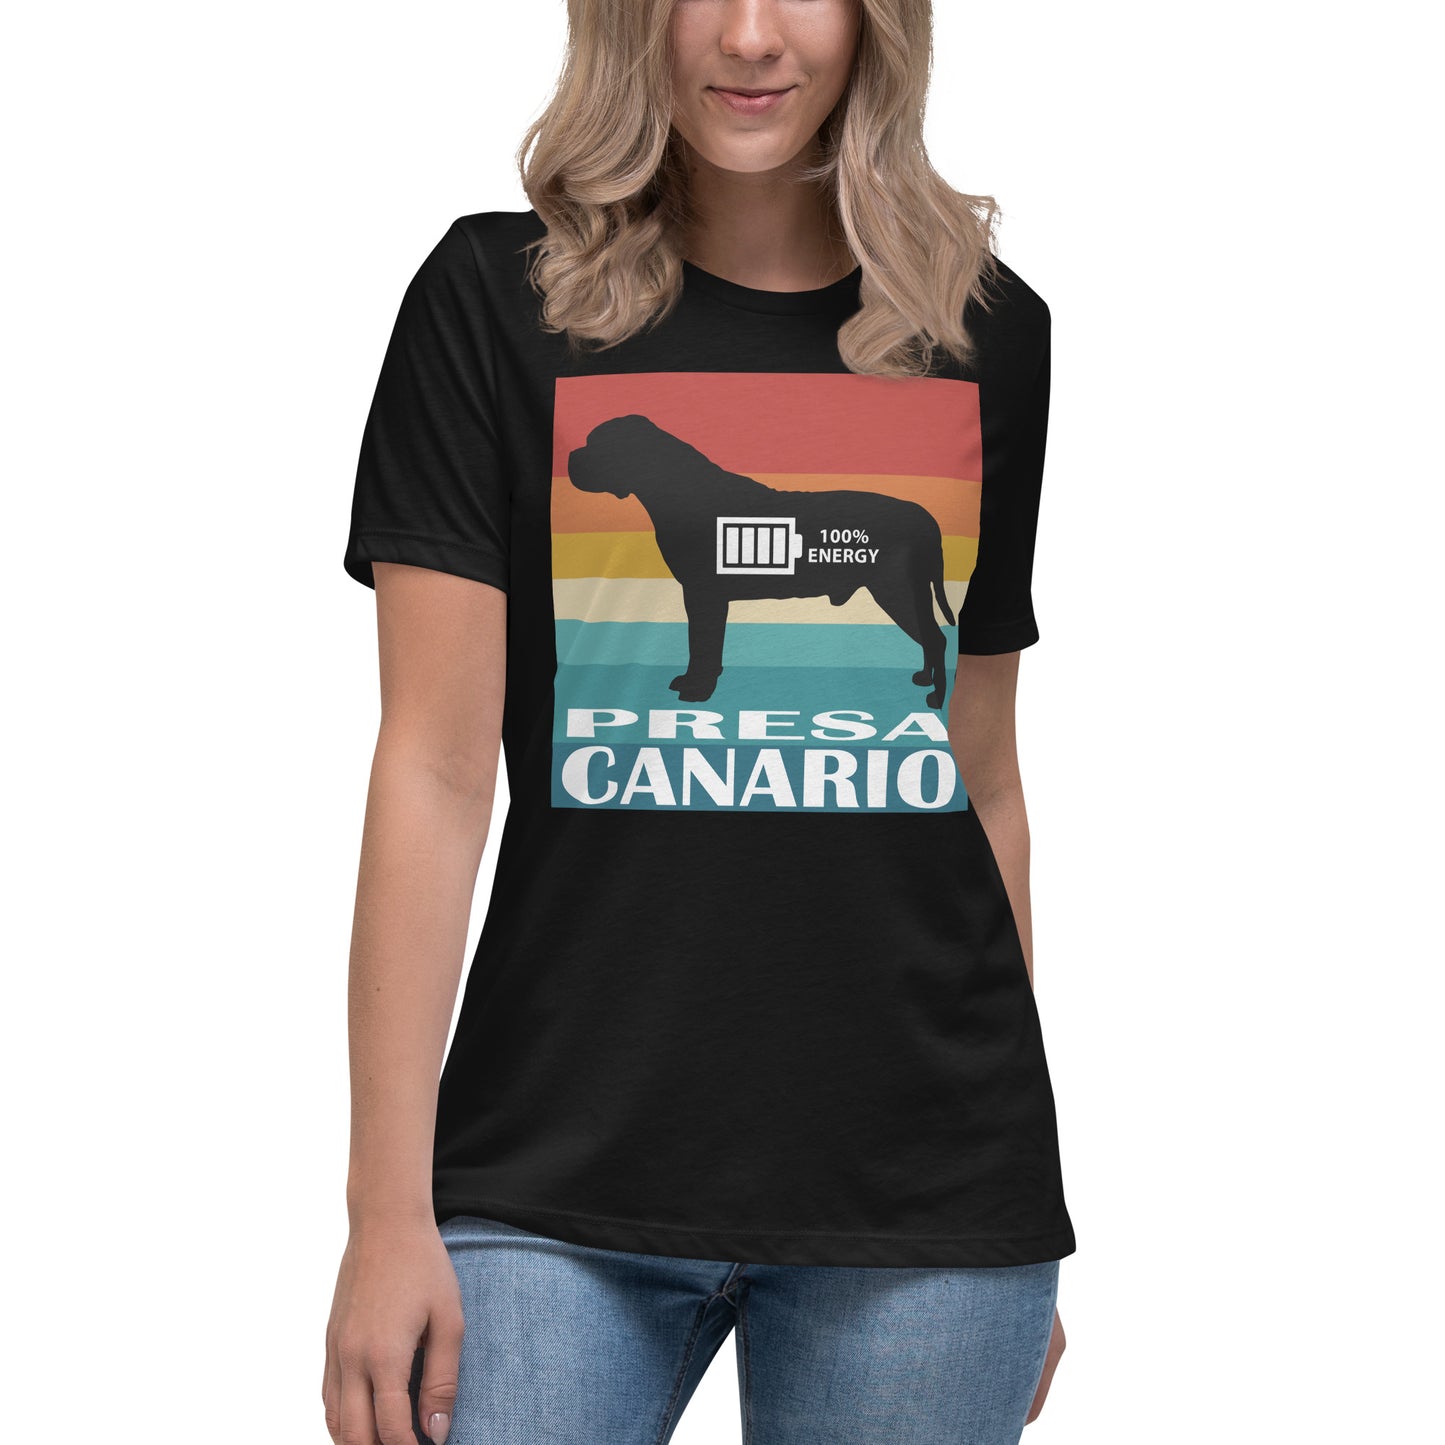 Presa Canario 100% Energy Women's Relaxed T-Shirt